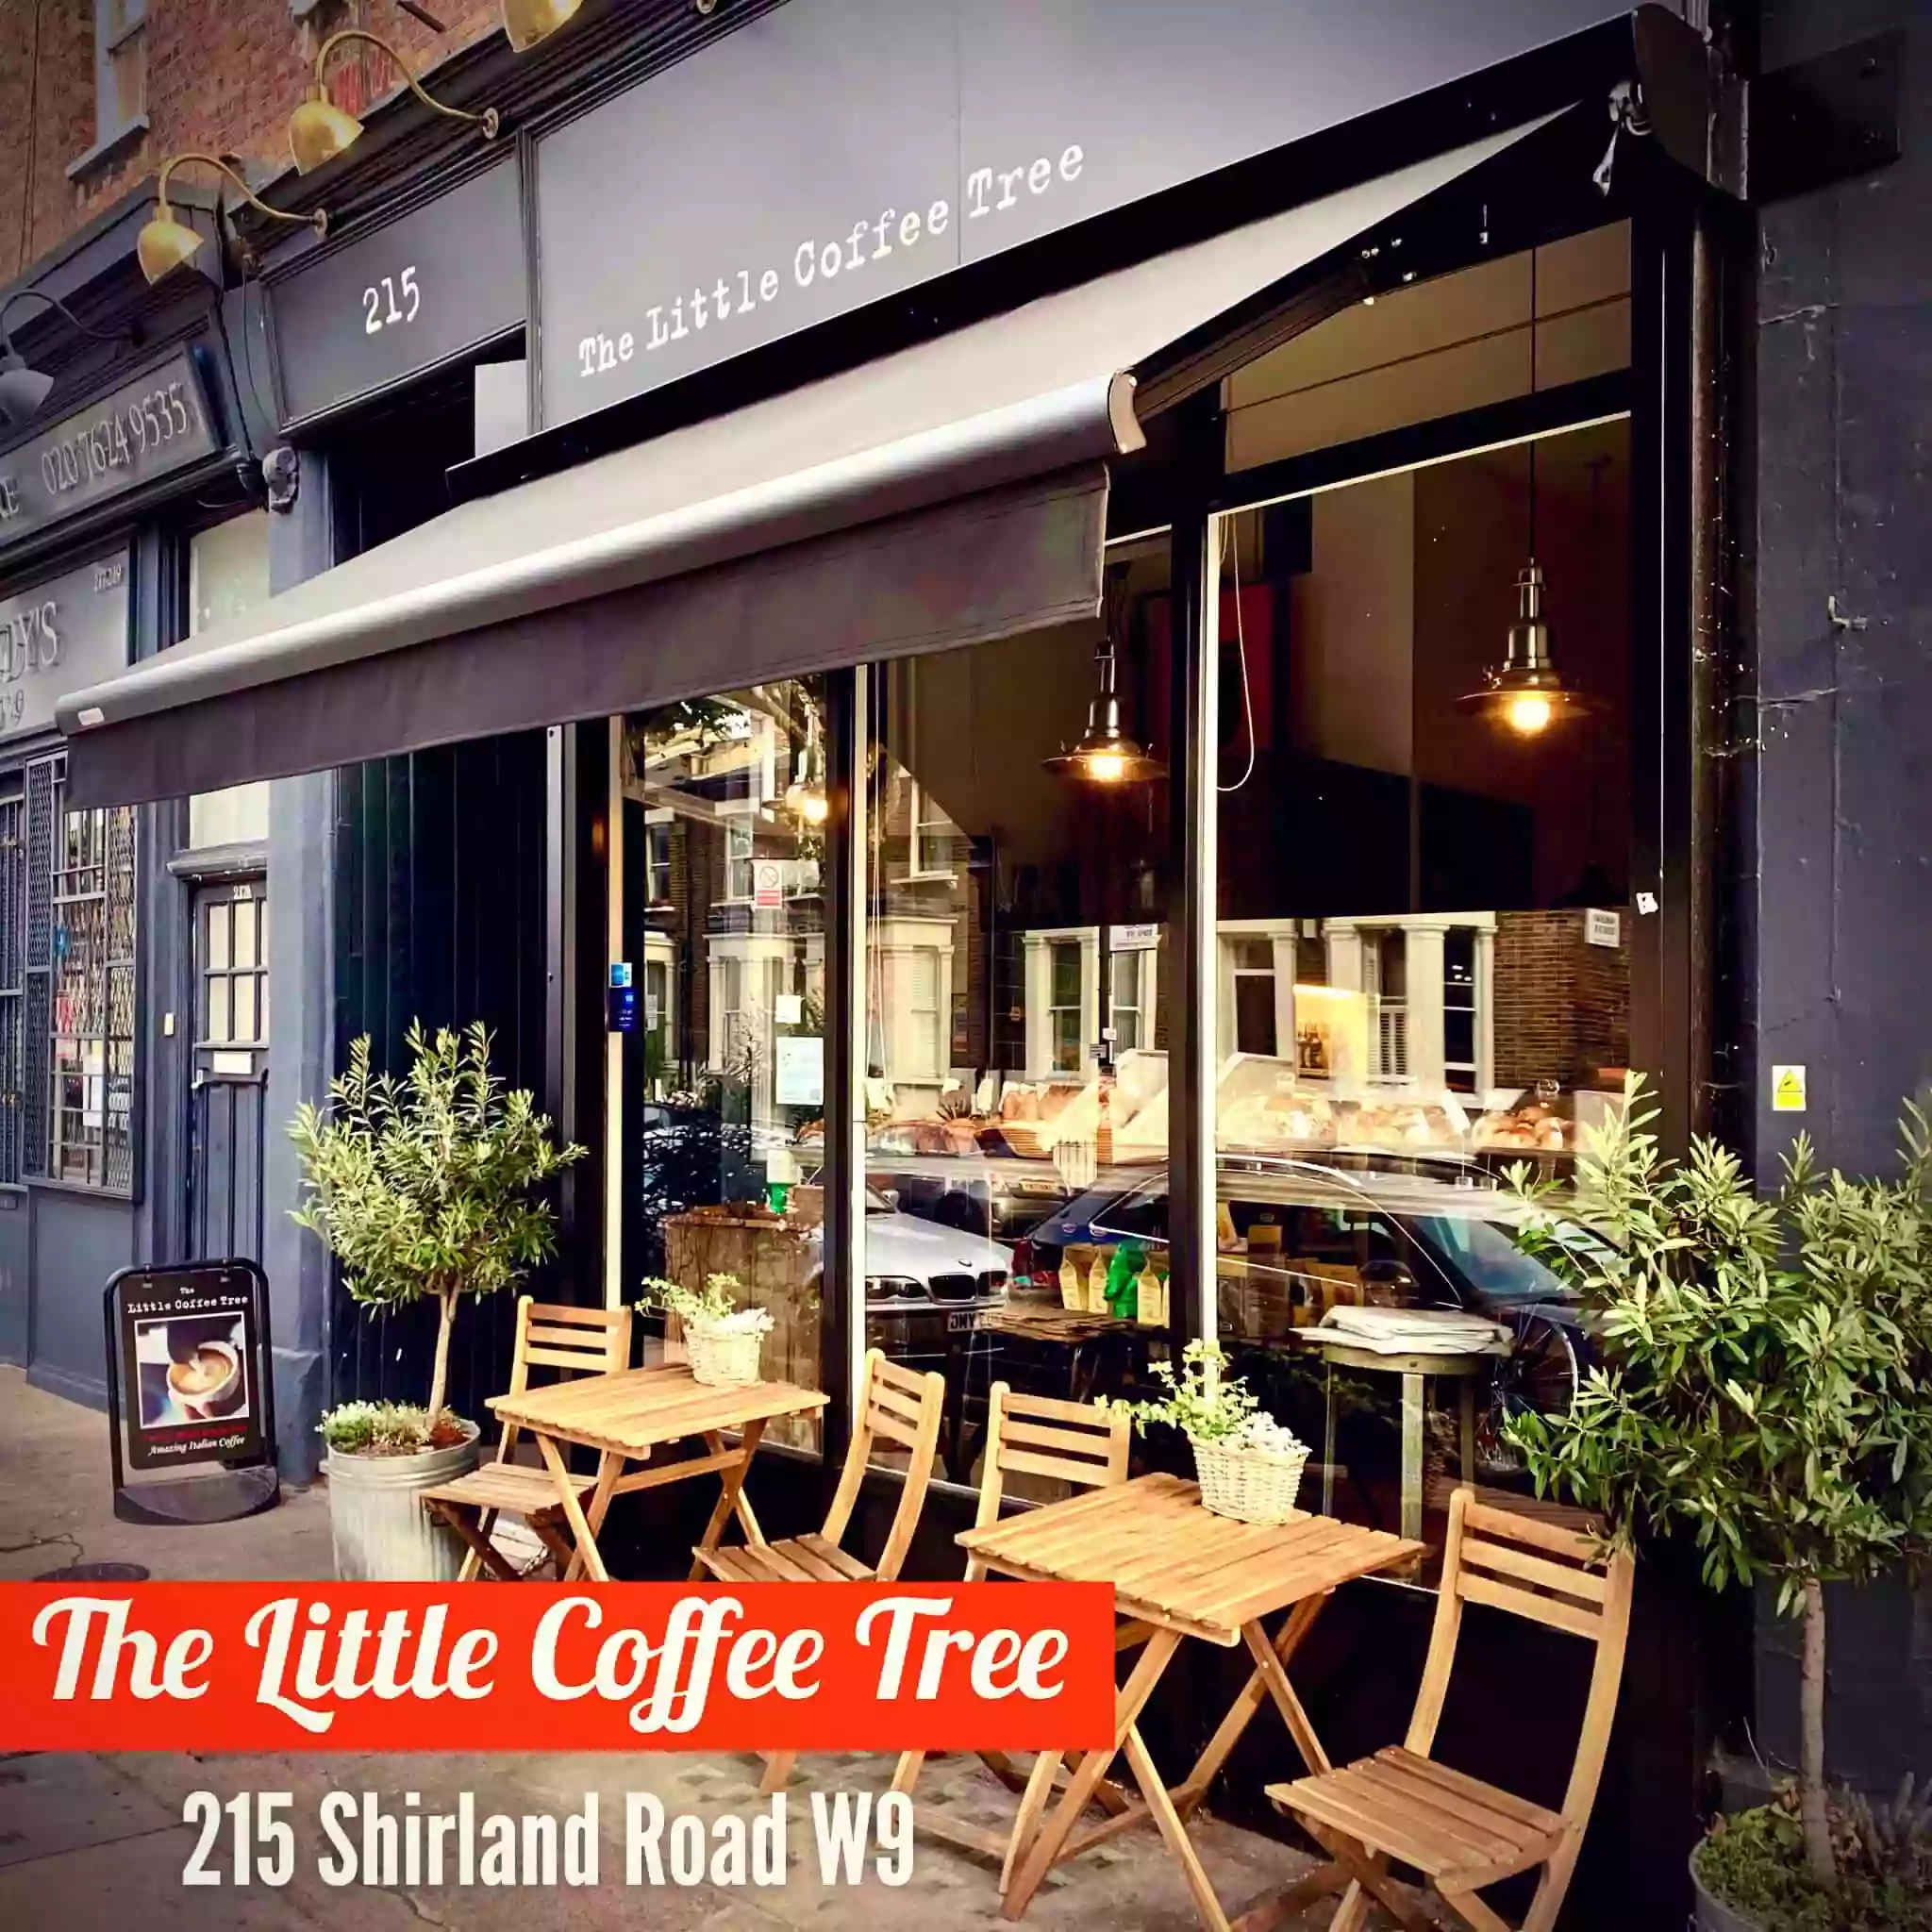 The Little Coffee Tree